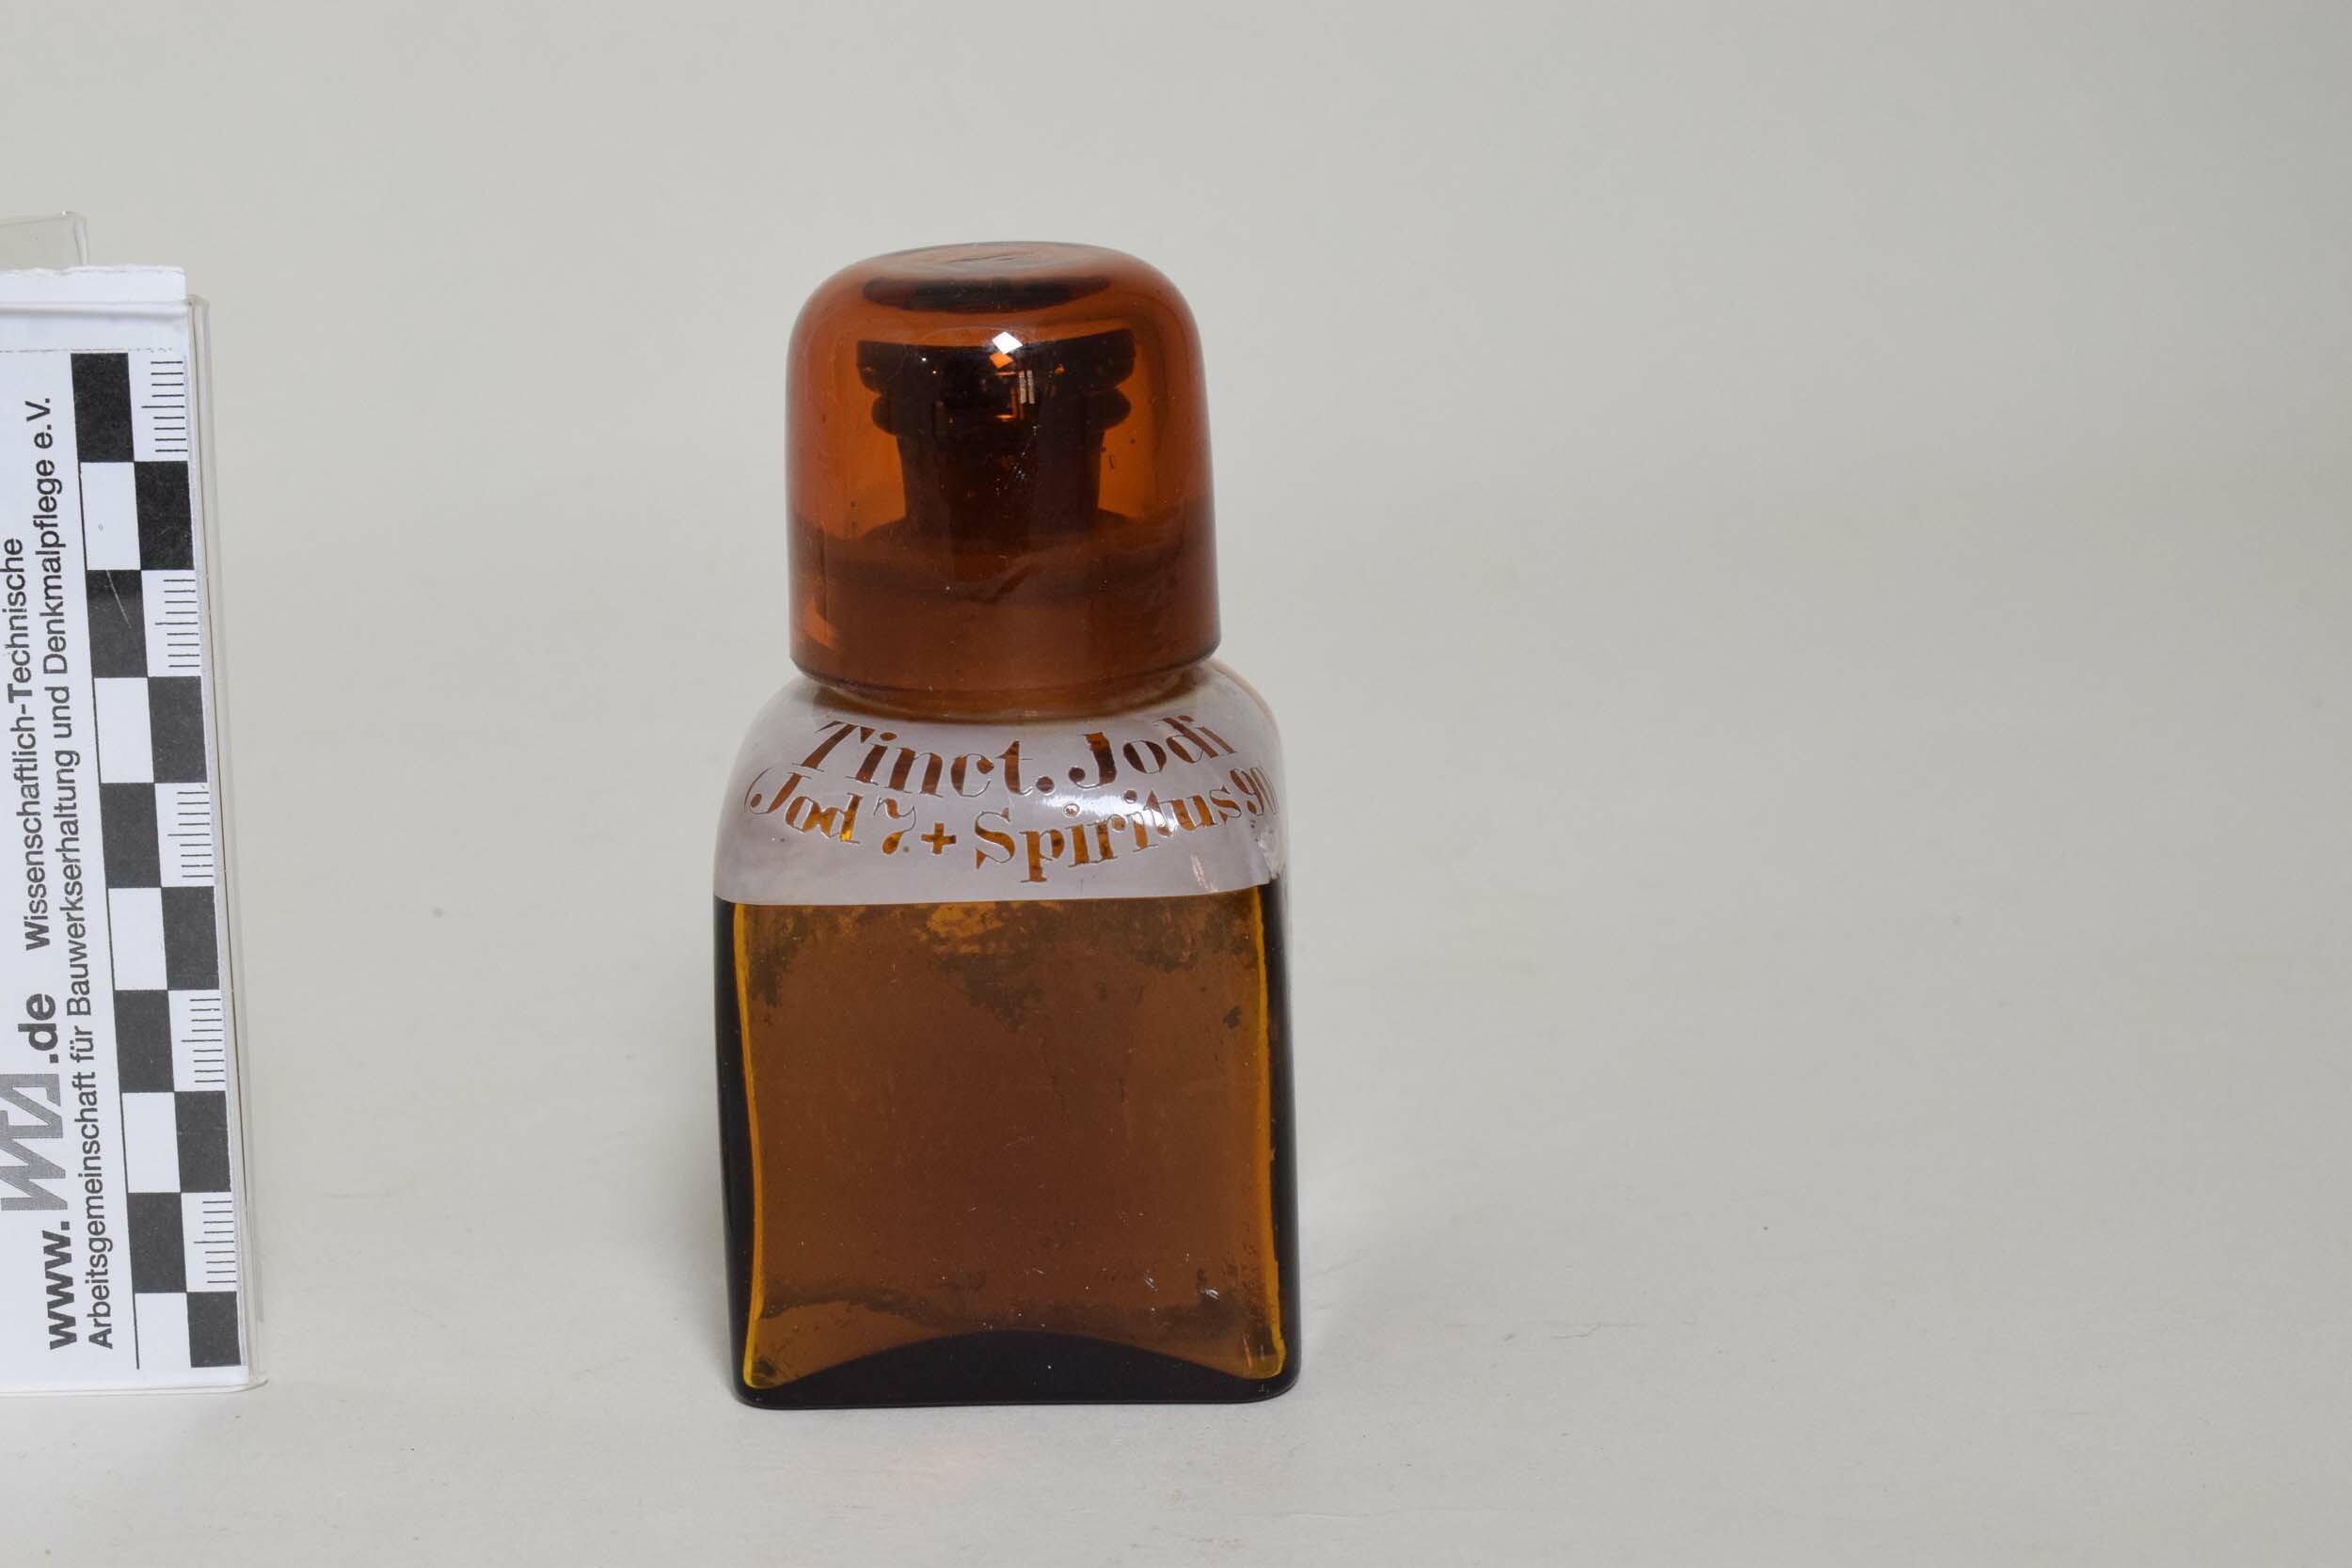 Apothekenflasche "Tinct. Jodi" (Jod-Tinktur) (Heimatmuseum Dohna CC BY-NC-SA)